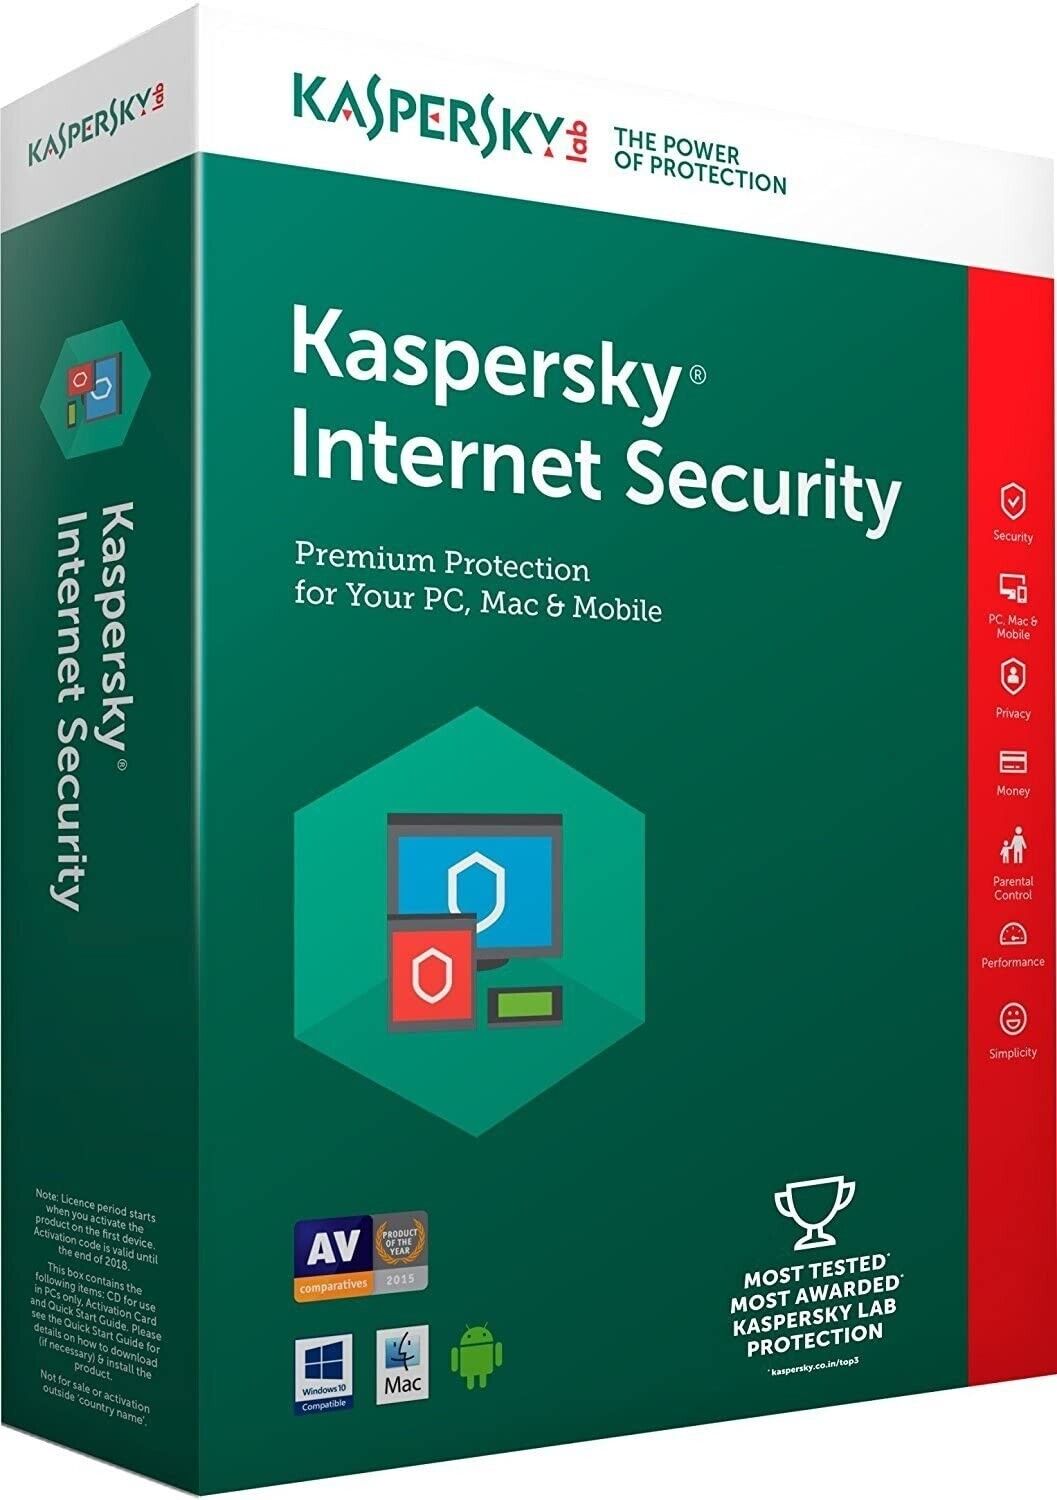 KASPERSKY INTERNET SECURITY - Foto 1 di 1